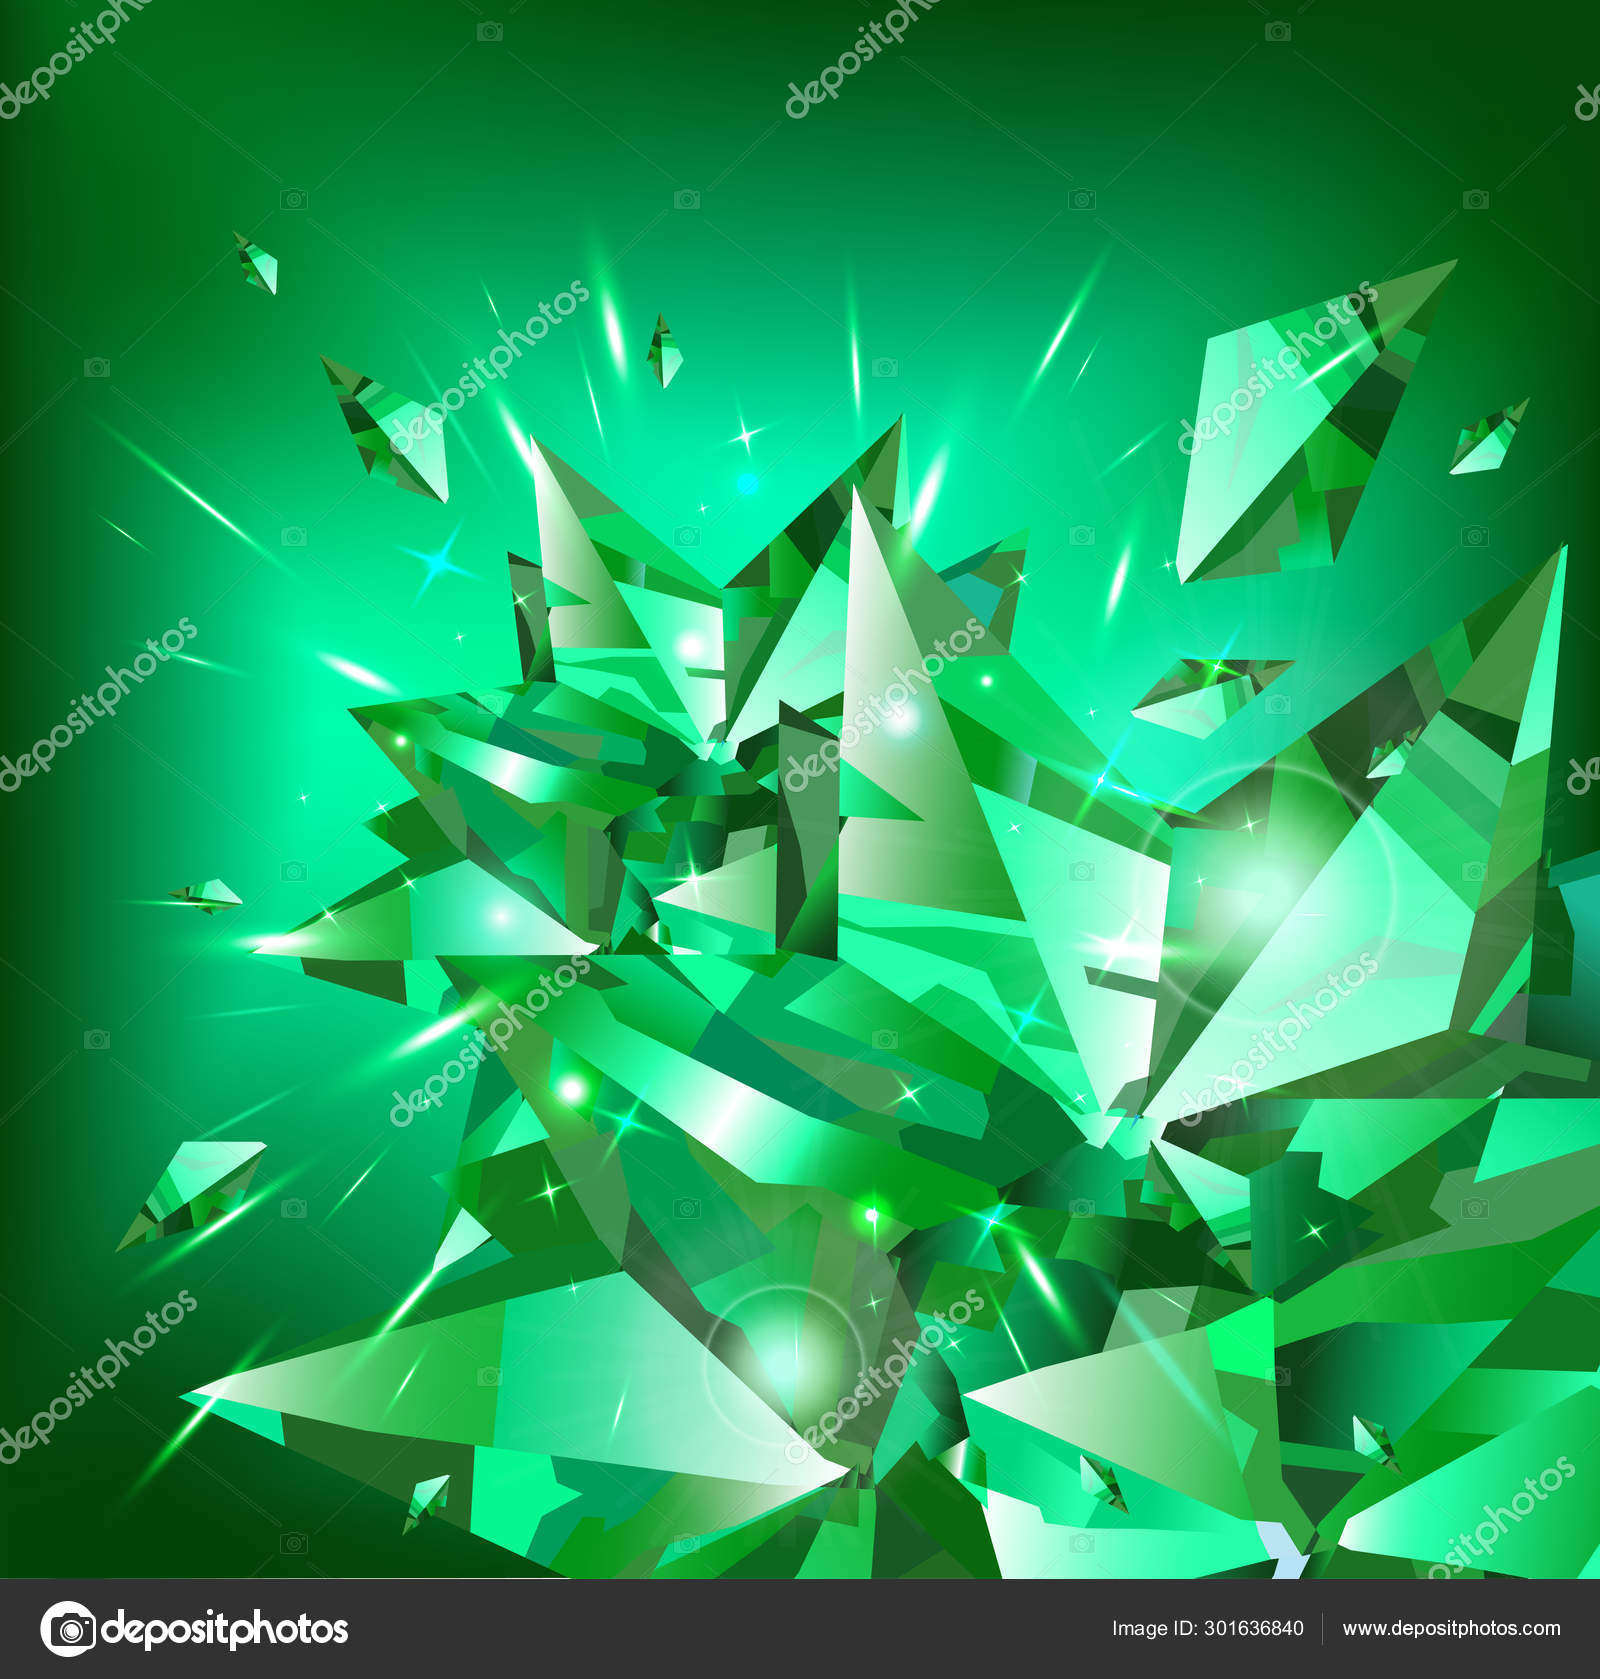 Emerald green background - free high resolution